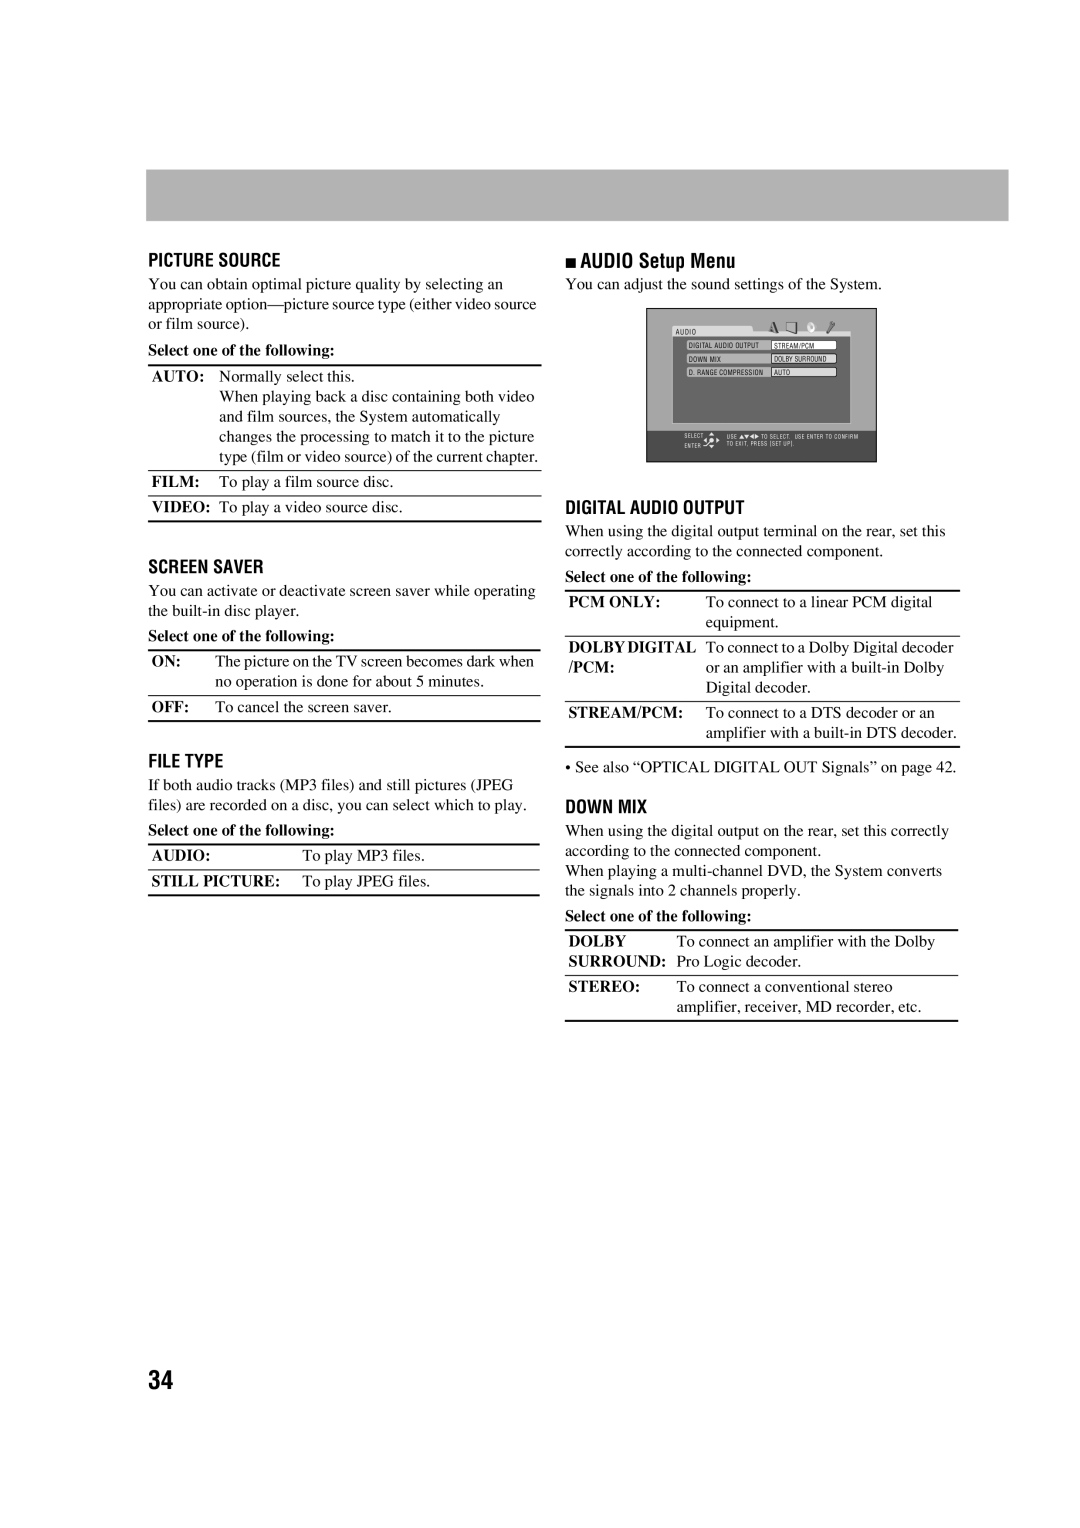 JVC CA-FSGD7, LVT1348-001C manual 7AUDIO Setup Menu, Picture Source, Screen Saver, File Type, Digital Audio Output, Down Mix 